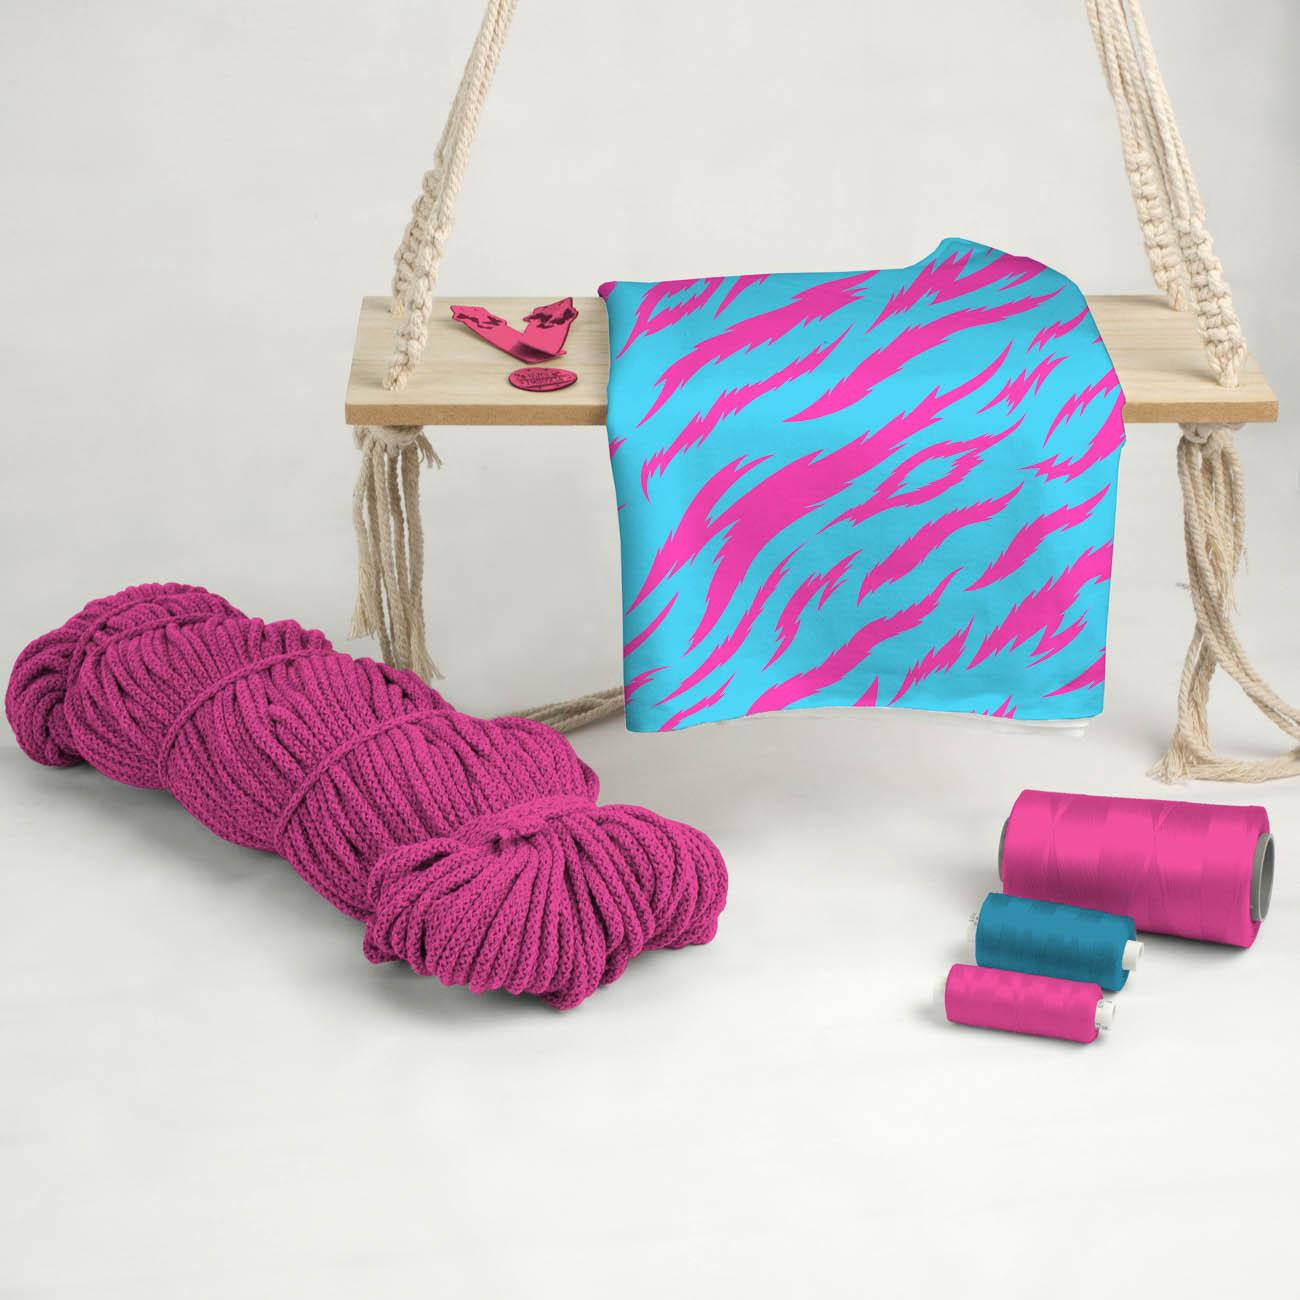 NEON ZEBRA PAT. 4 - Cotton woven fabric